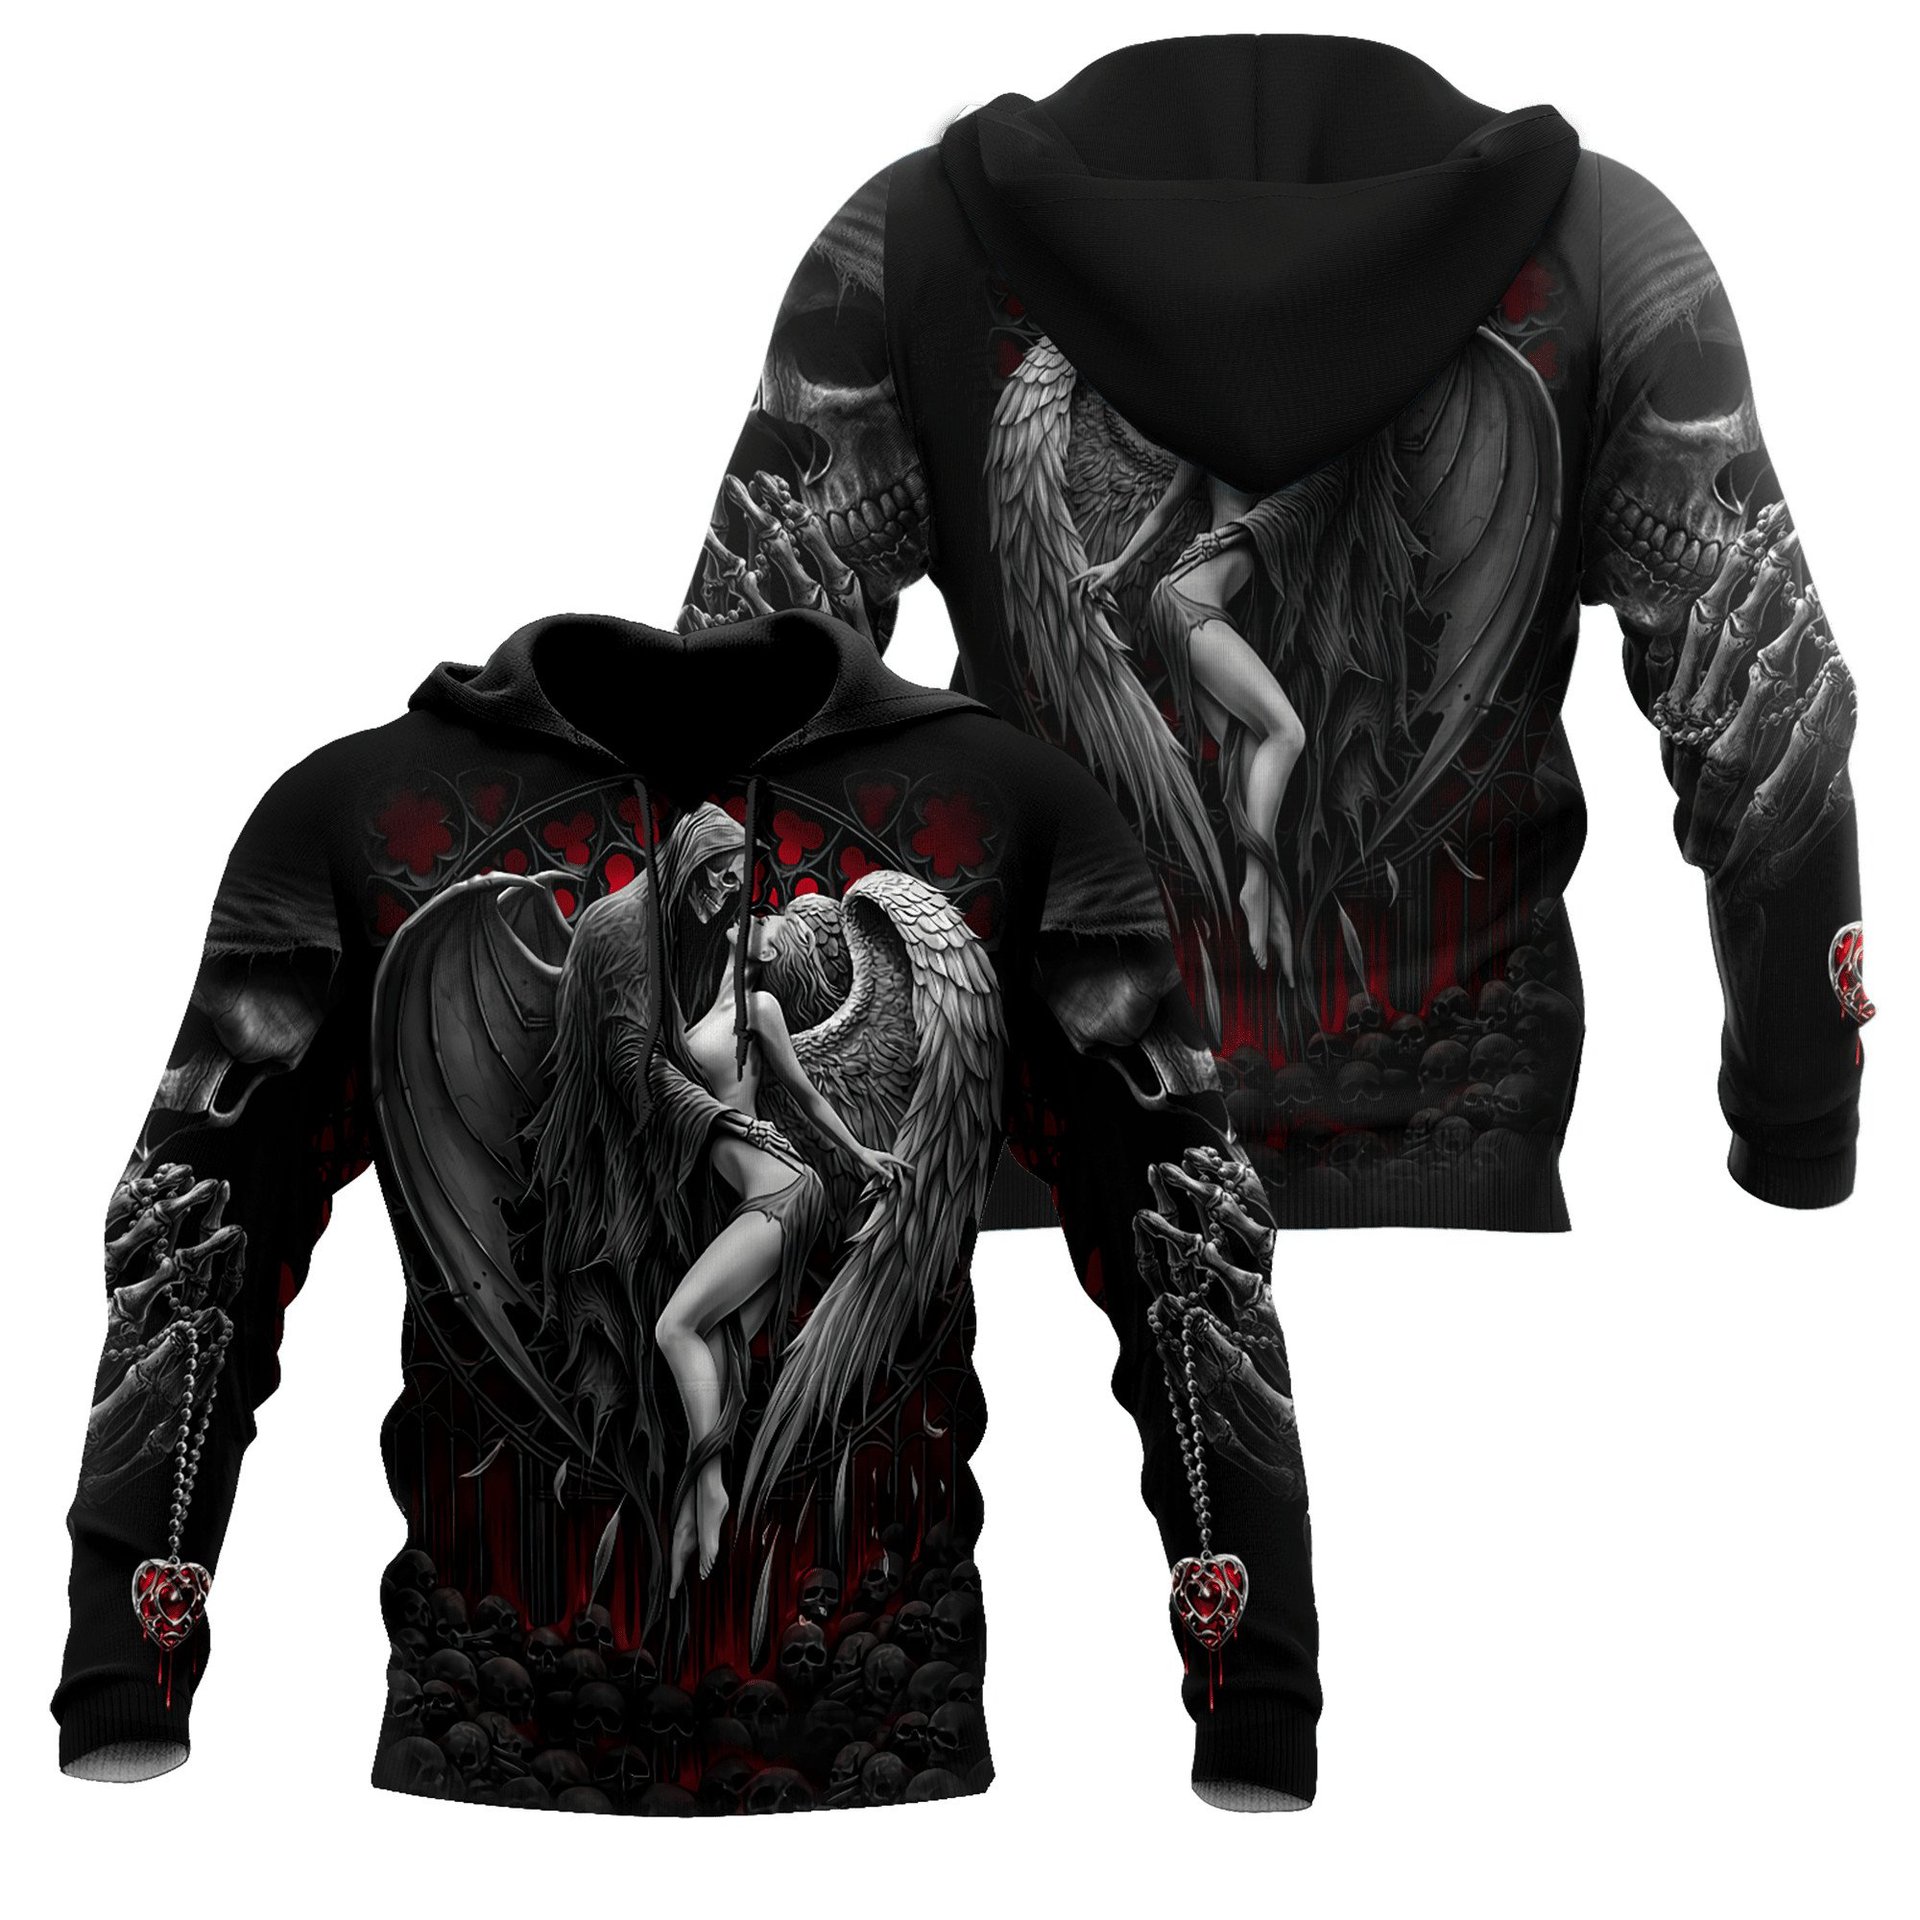 Unisex Angel and Demon Hoodies Halloween Sweatshirt Pullover 3D Printed Hip Hop Youth Hoody S-5XL